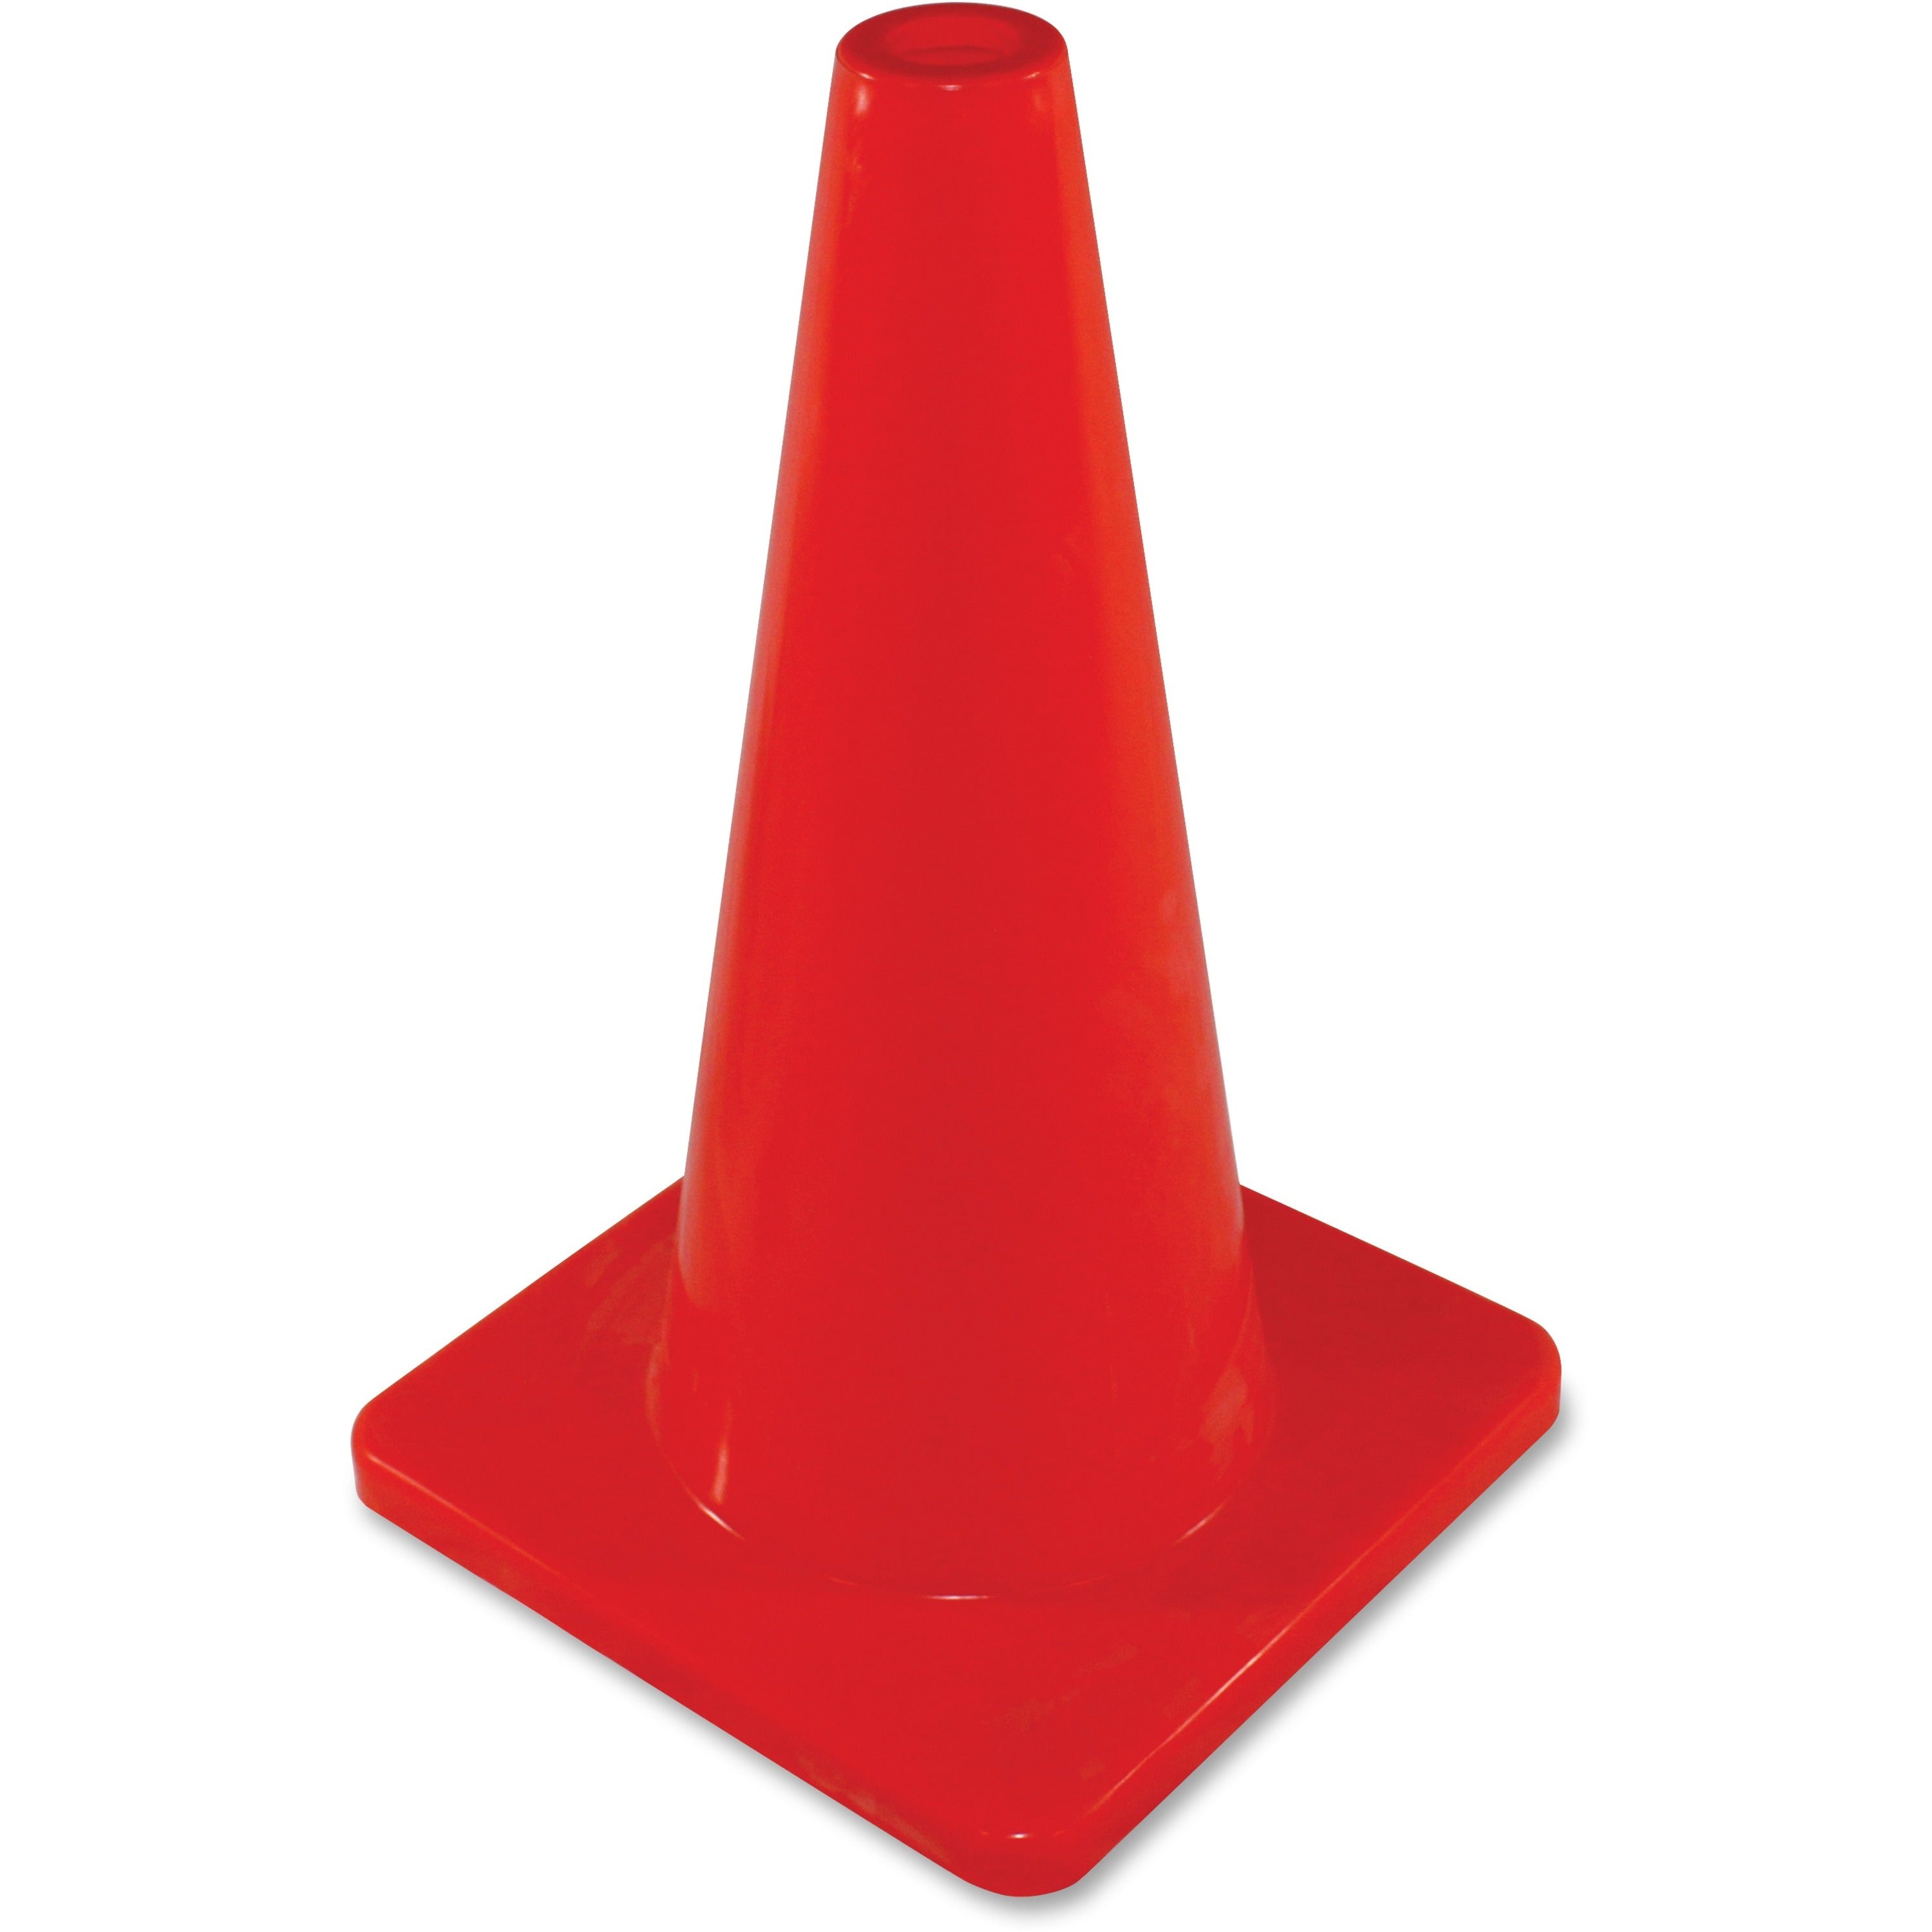 impact-18-safety-cone-6-carton-108-width-x-18-height-cone-shape-orange_imp7308ct - 1